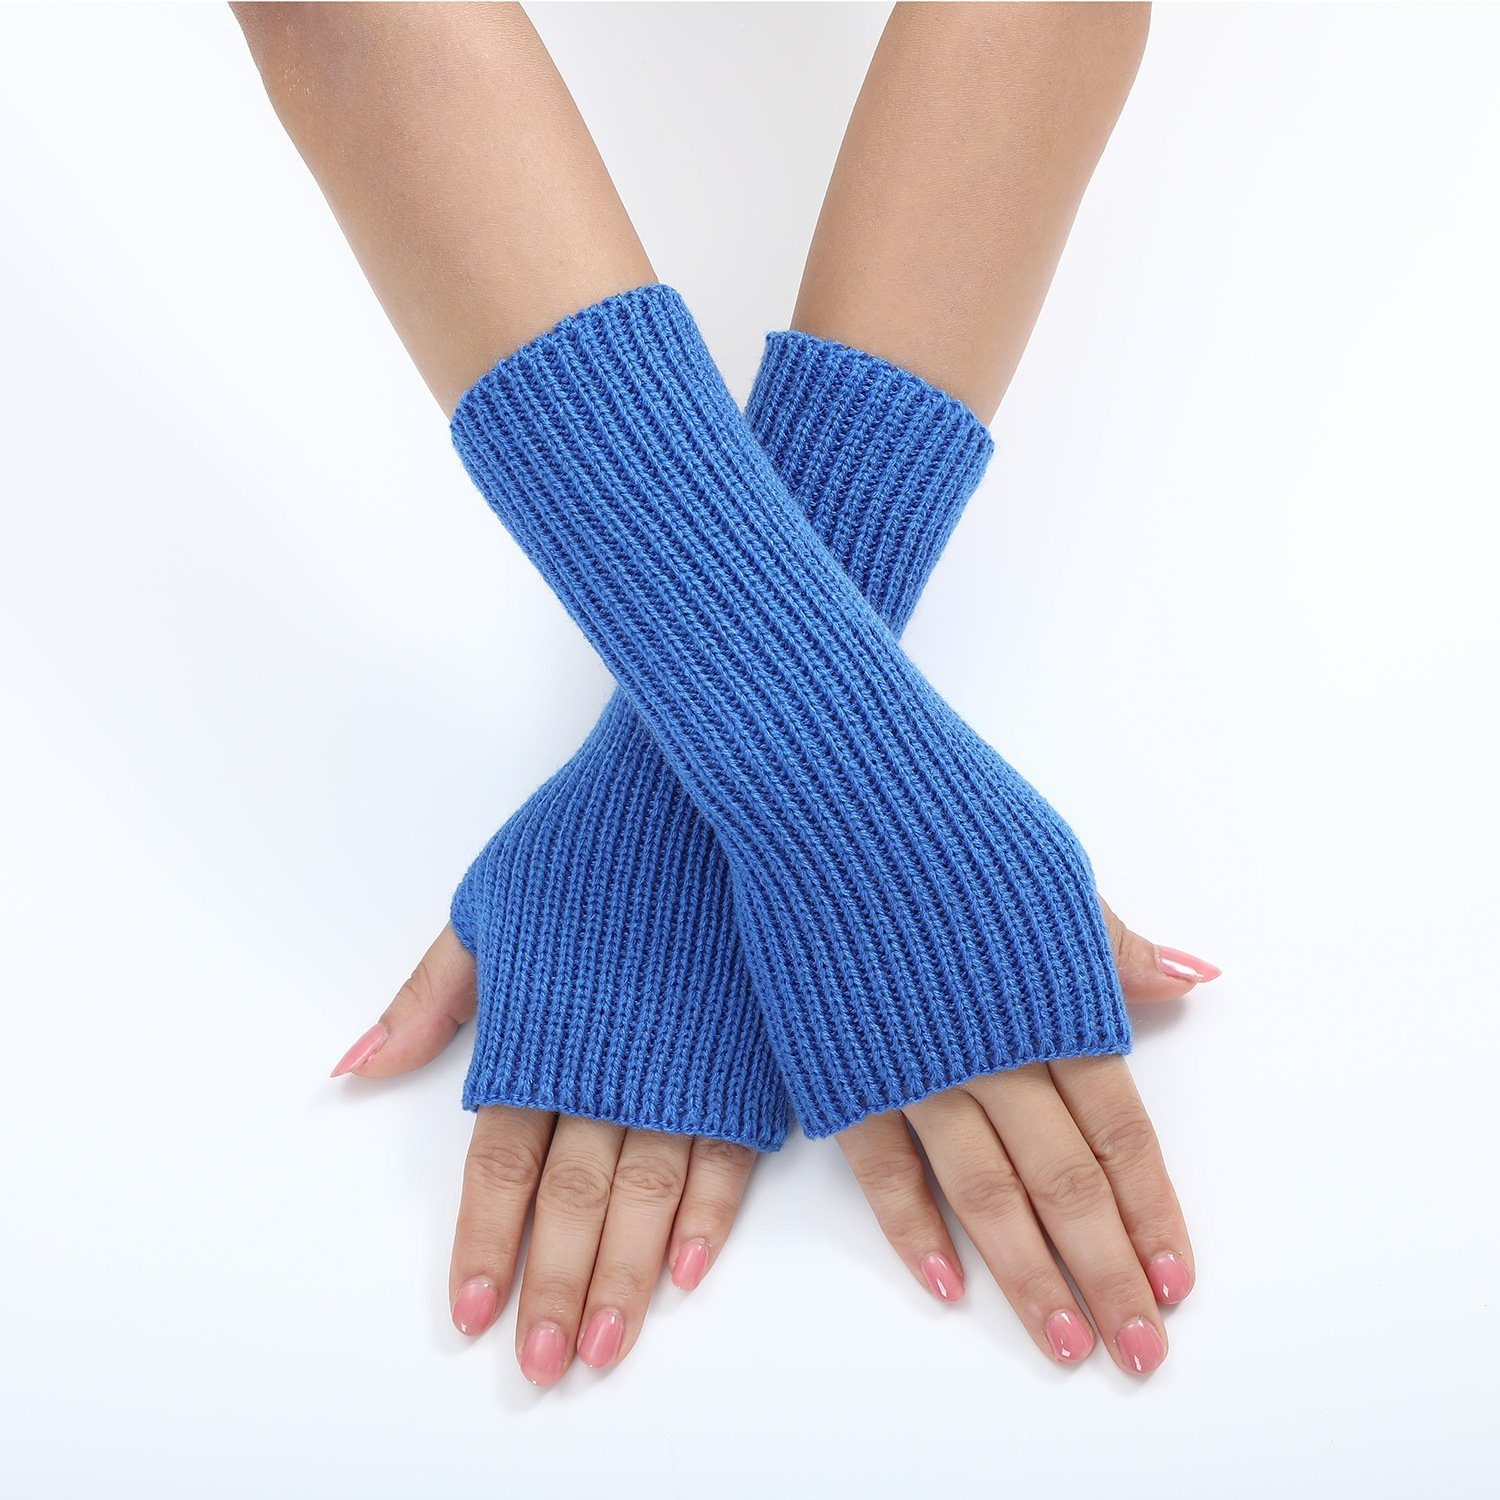 Union Reisen Strickhandschuhe Stilvolle gestrickte warme Nadelstreifenhandschuhe blua